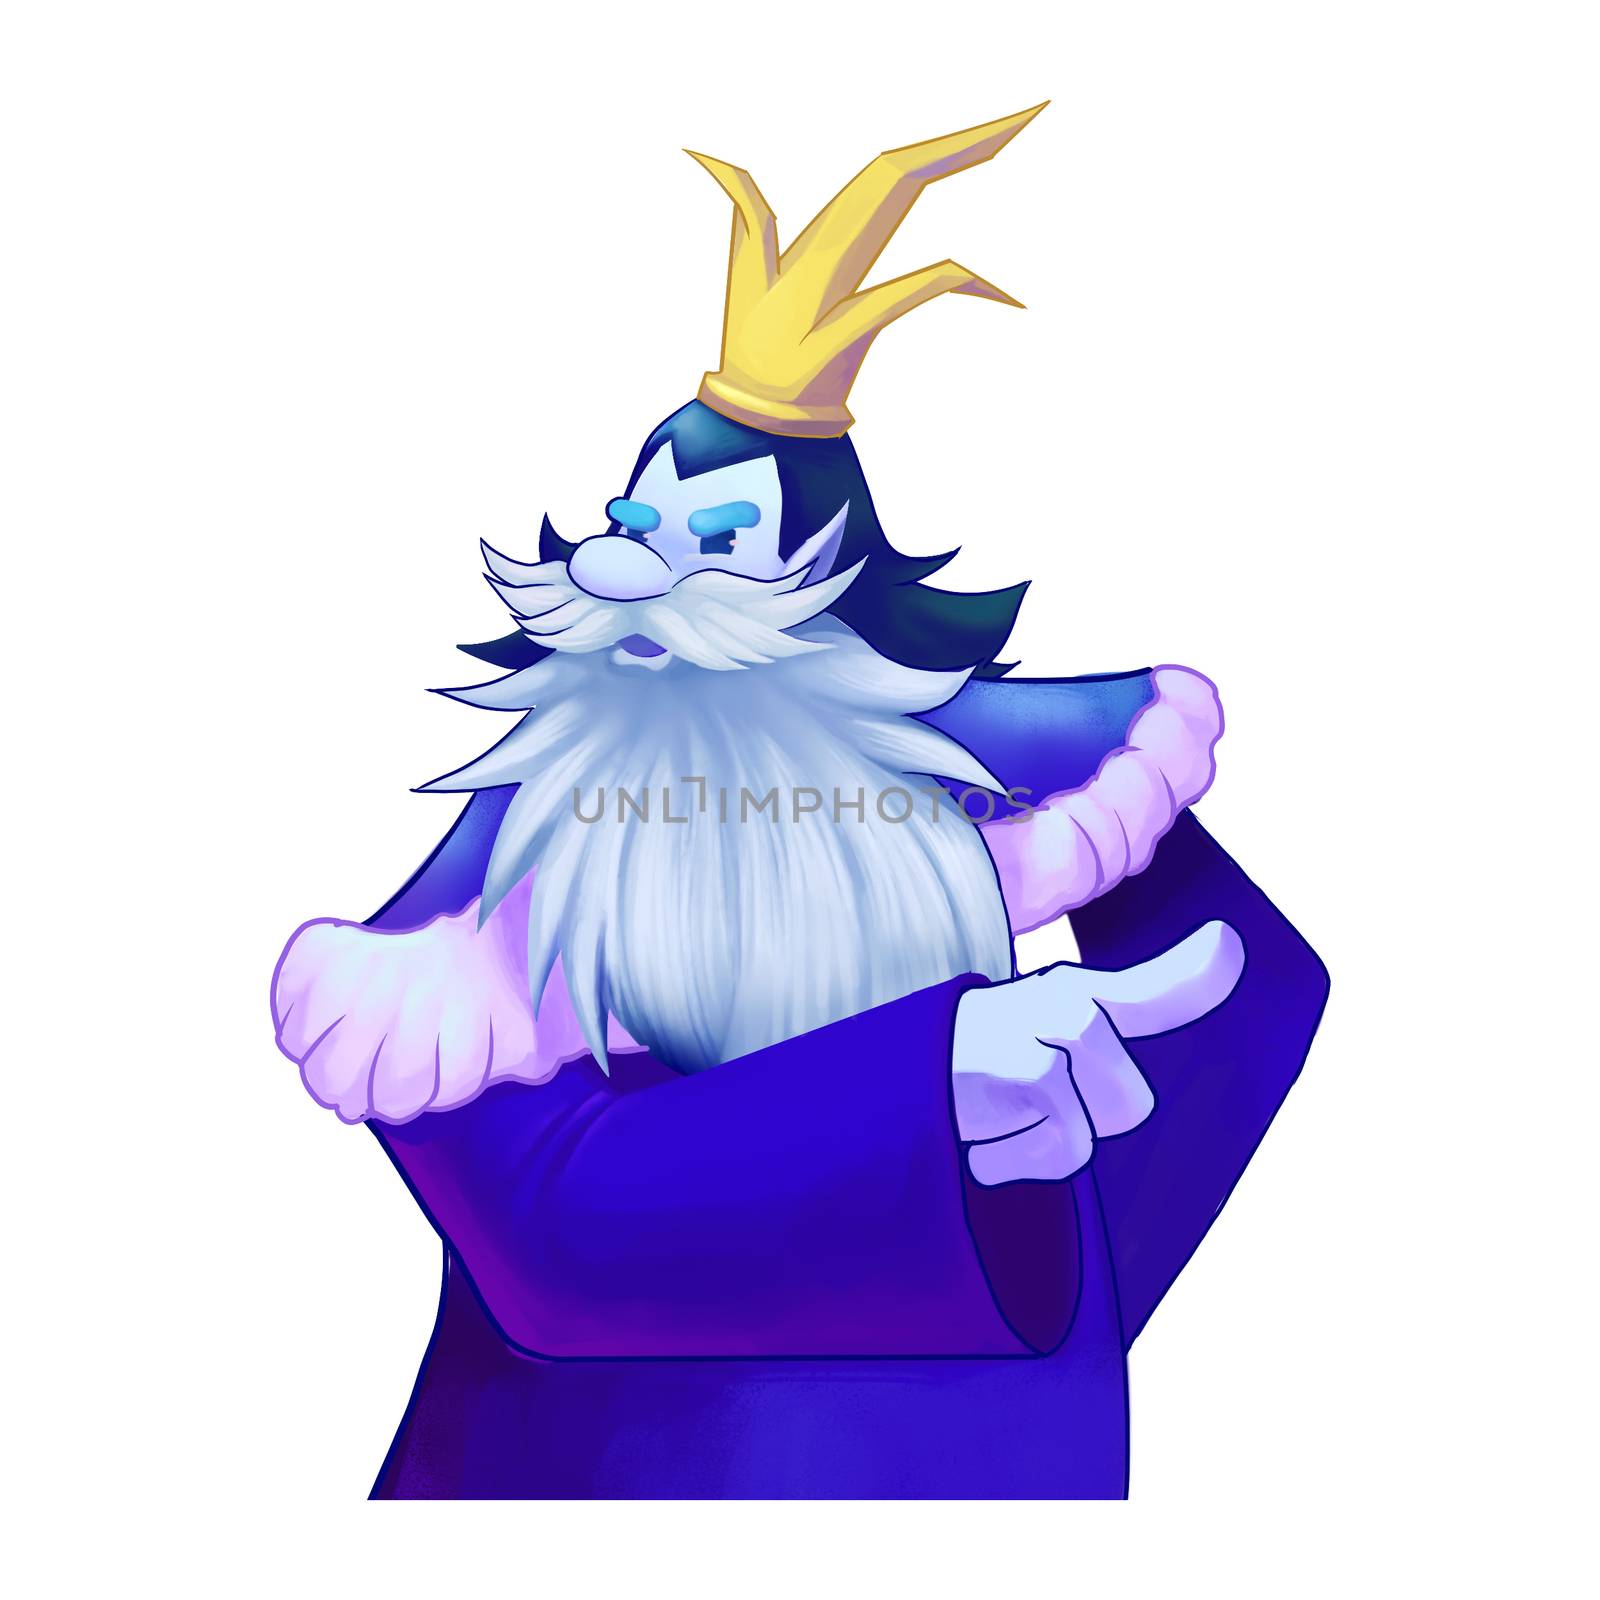 Illustration: A King Give Orders. Viking, Dwarf King, Big beard, Crown. Fantastic Cartoon Style Character Design.